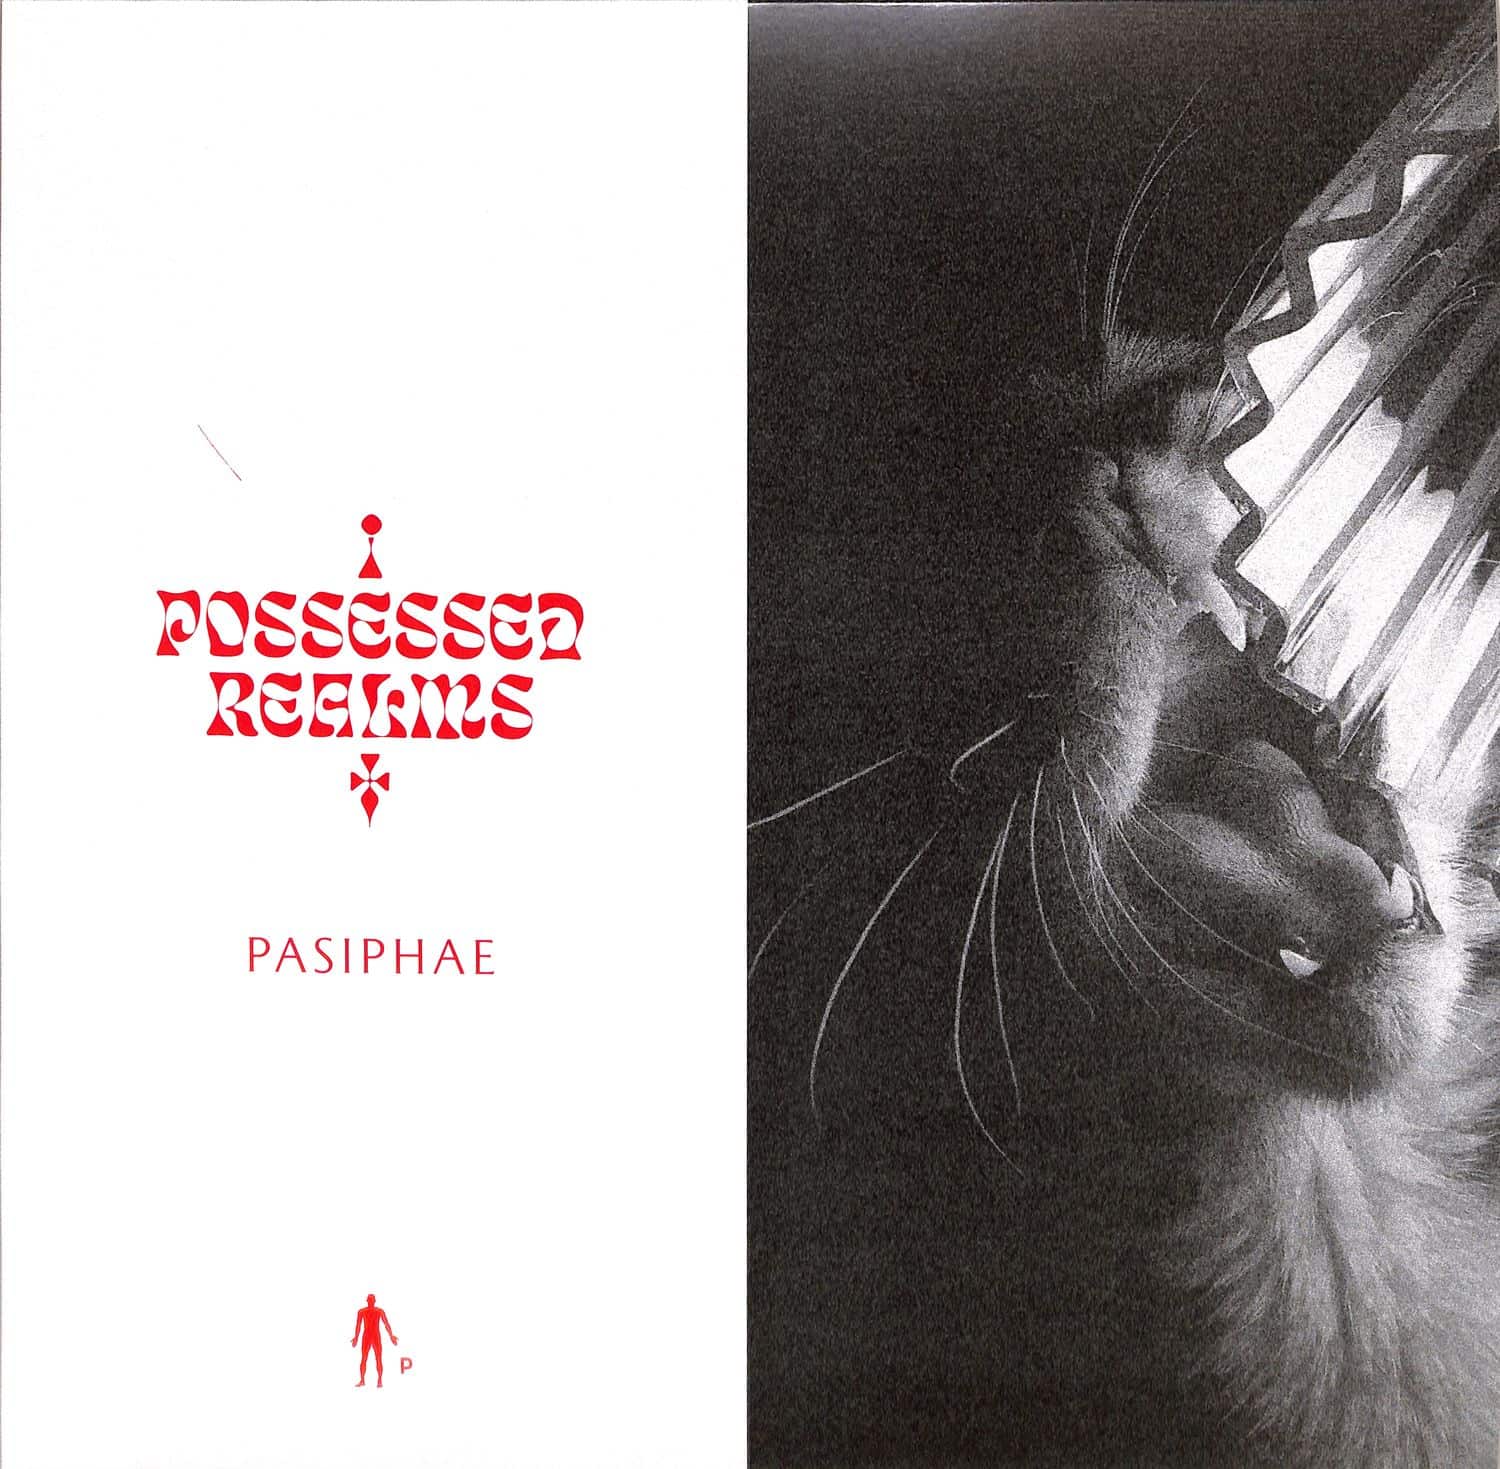 Pasiphae - POSSESSED REALMS